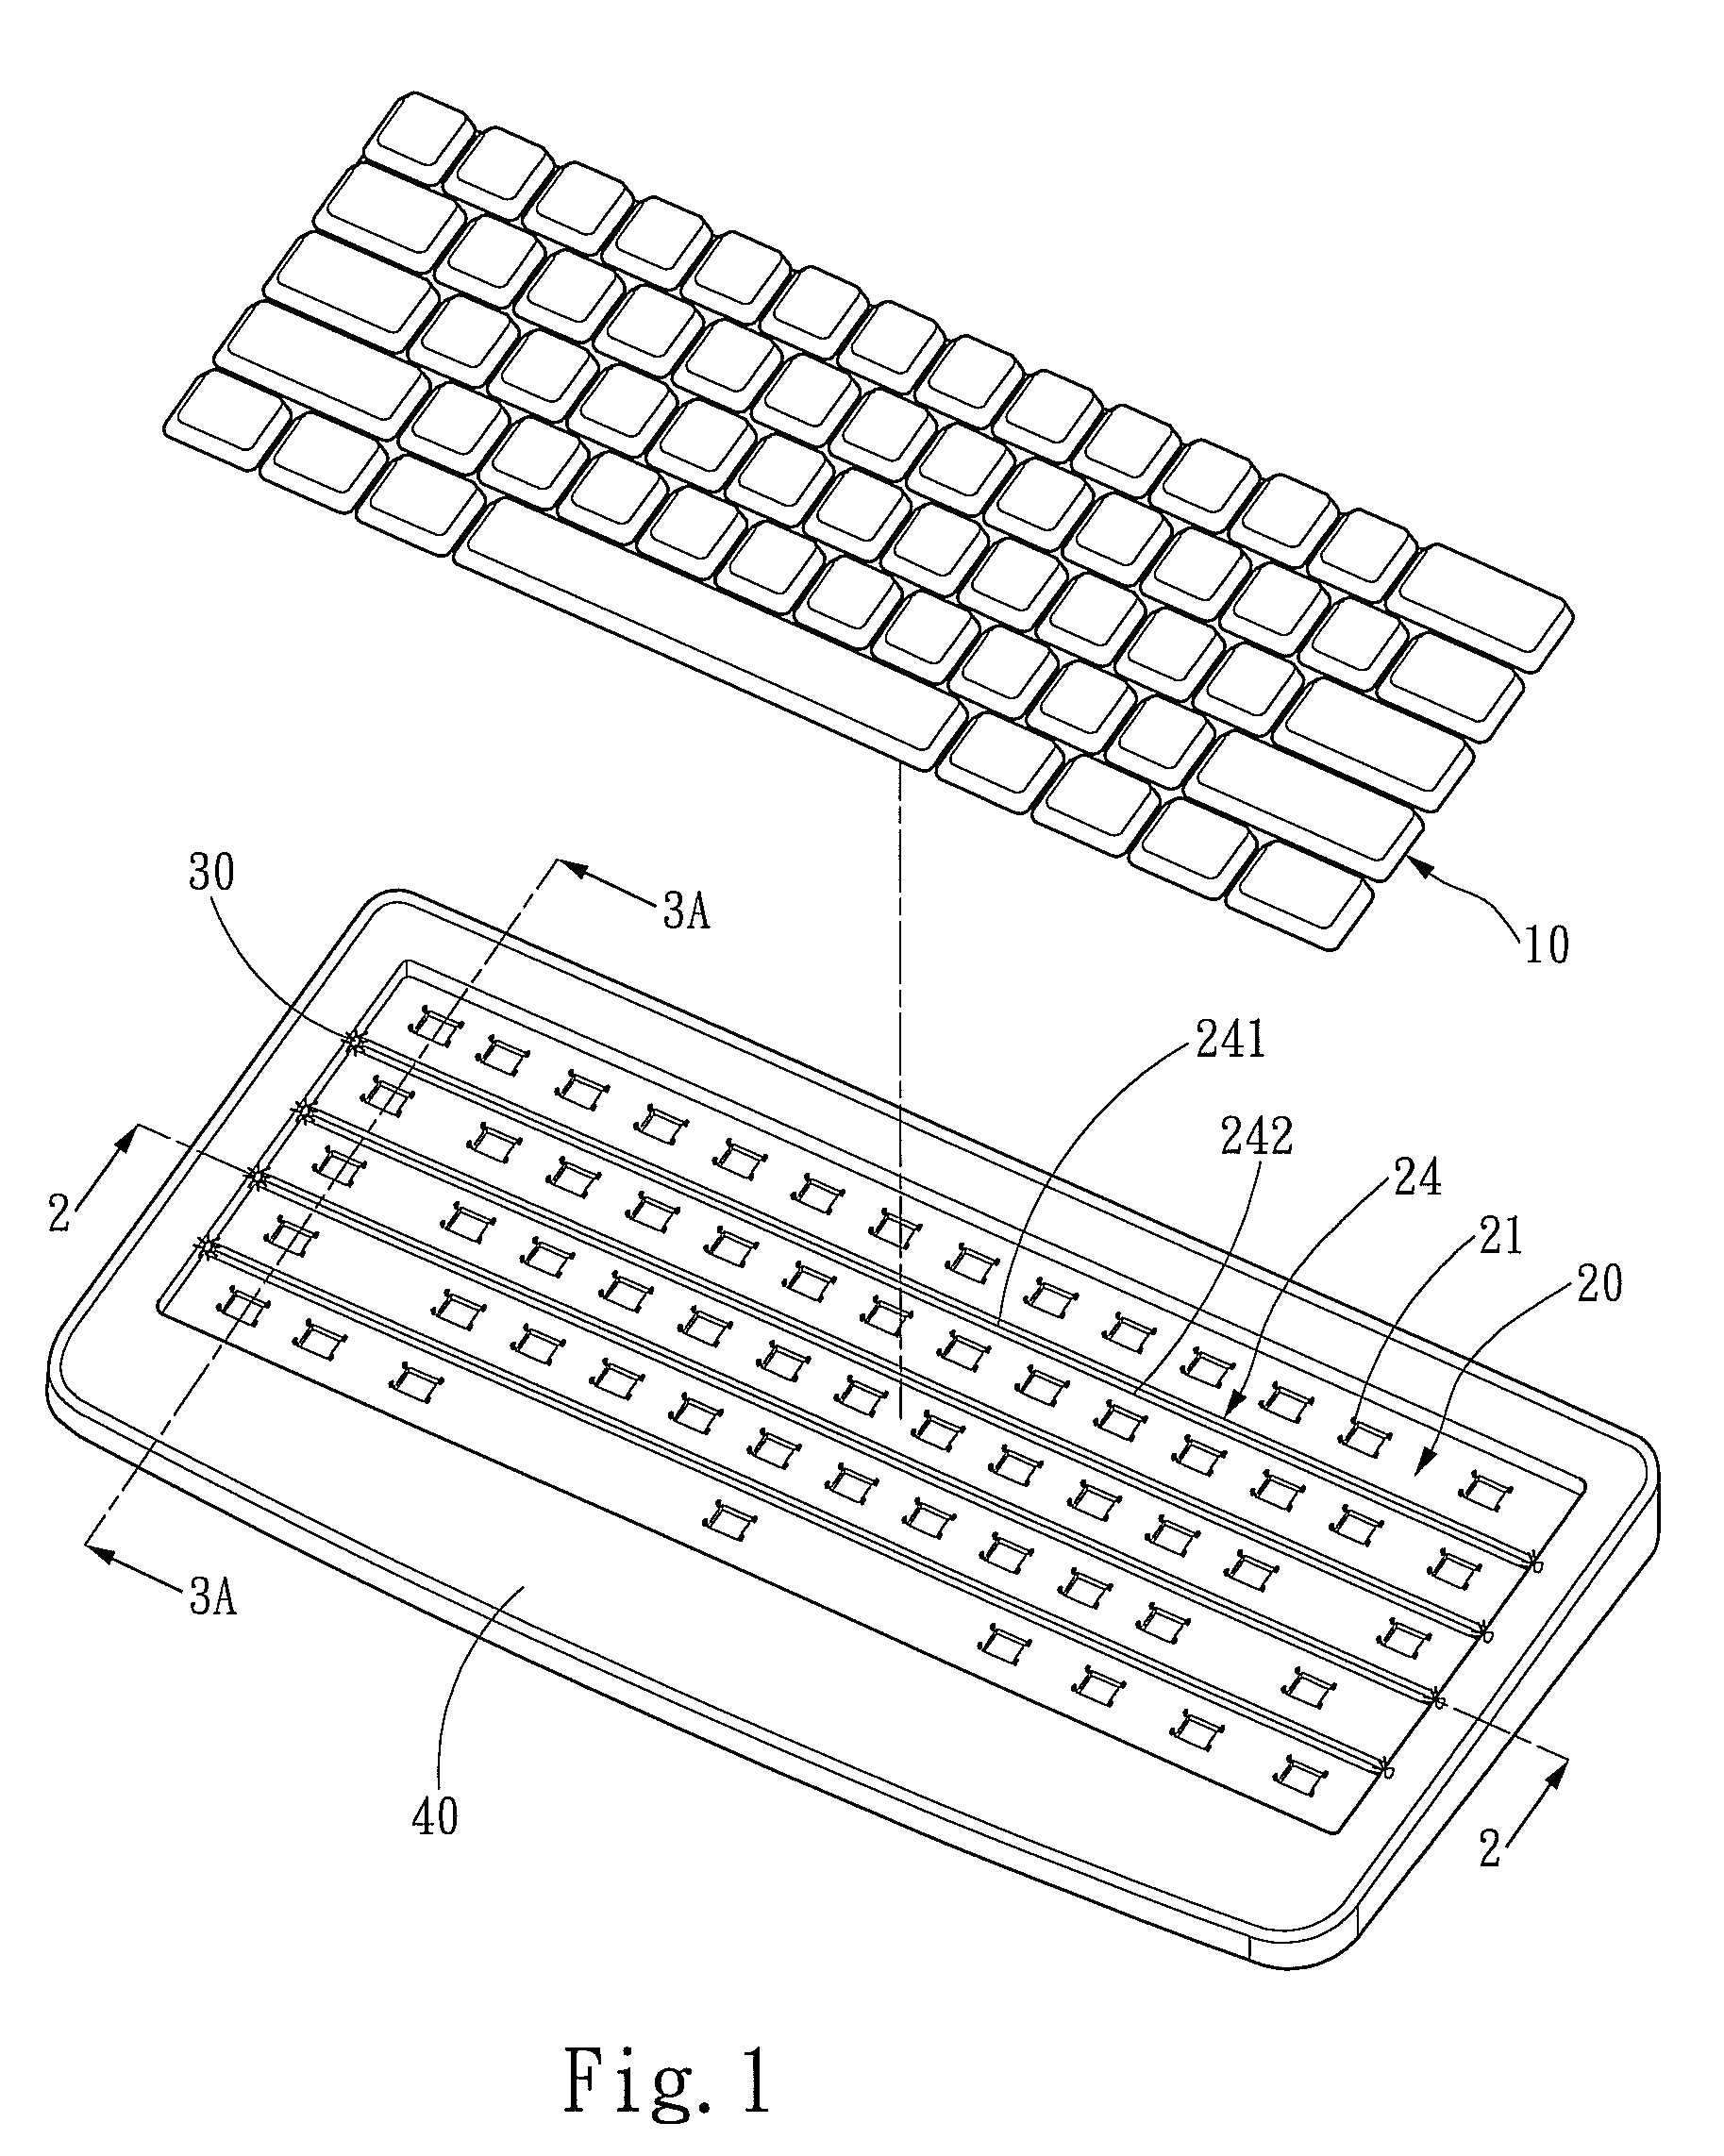 Keyboard with illuminating architecture